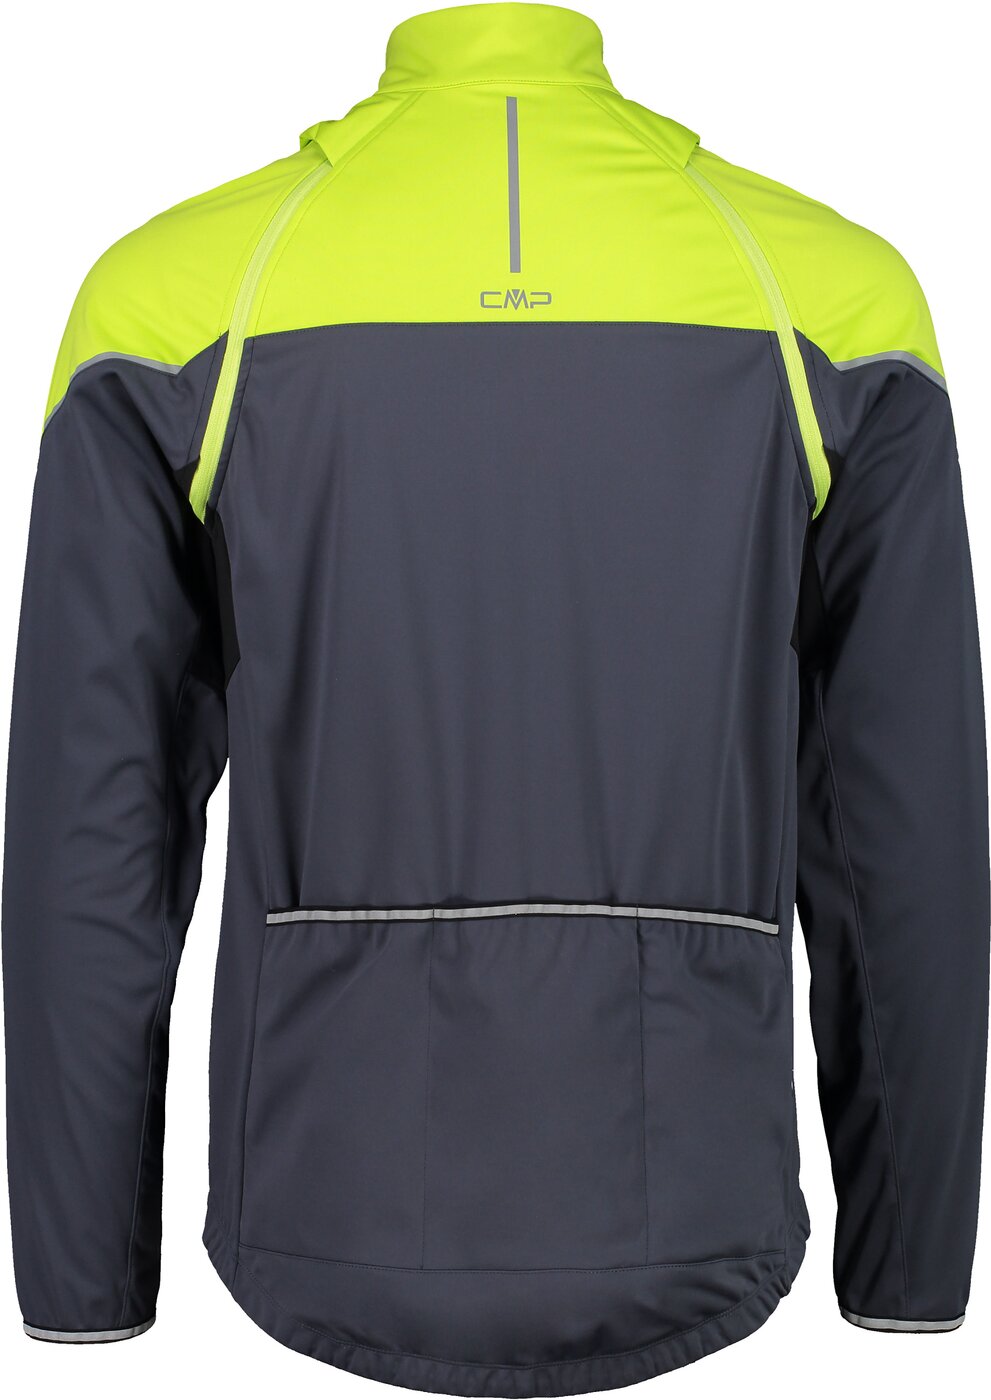 CMP Jacket With Detachable Sleeves Herren Funktionsjacke kaufen